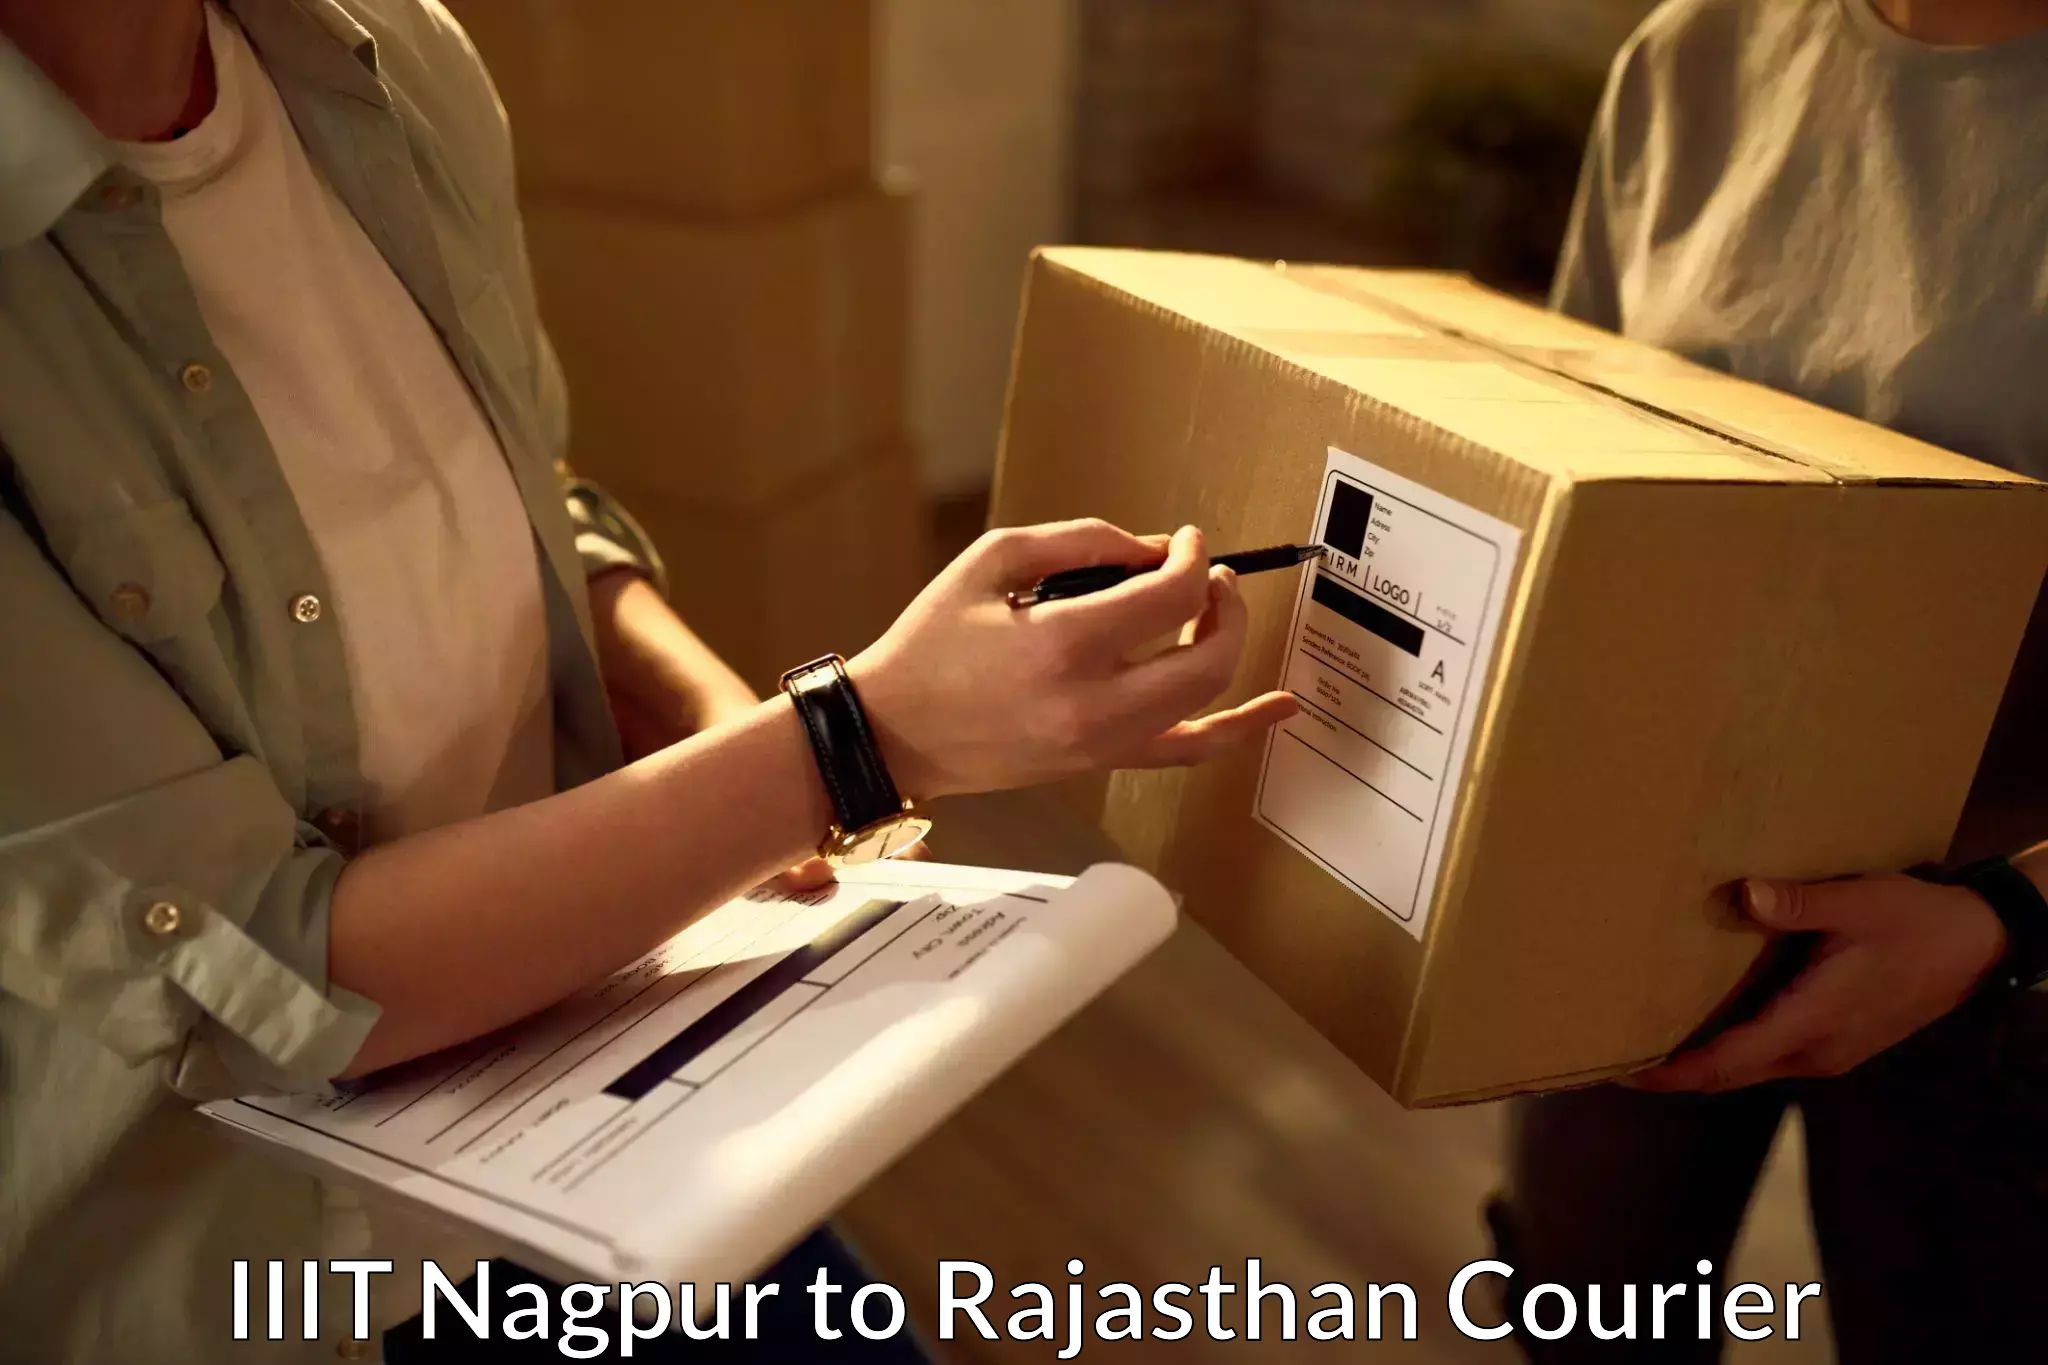 Courier service comparison IIIT Nagpur to Srimadhopur